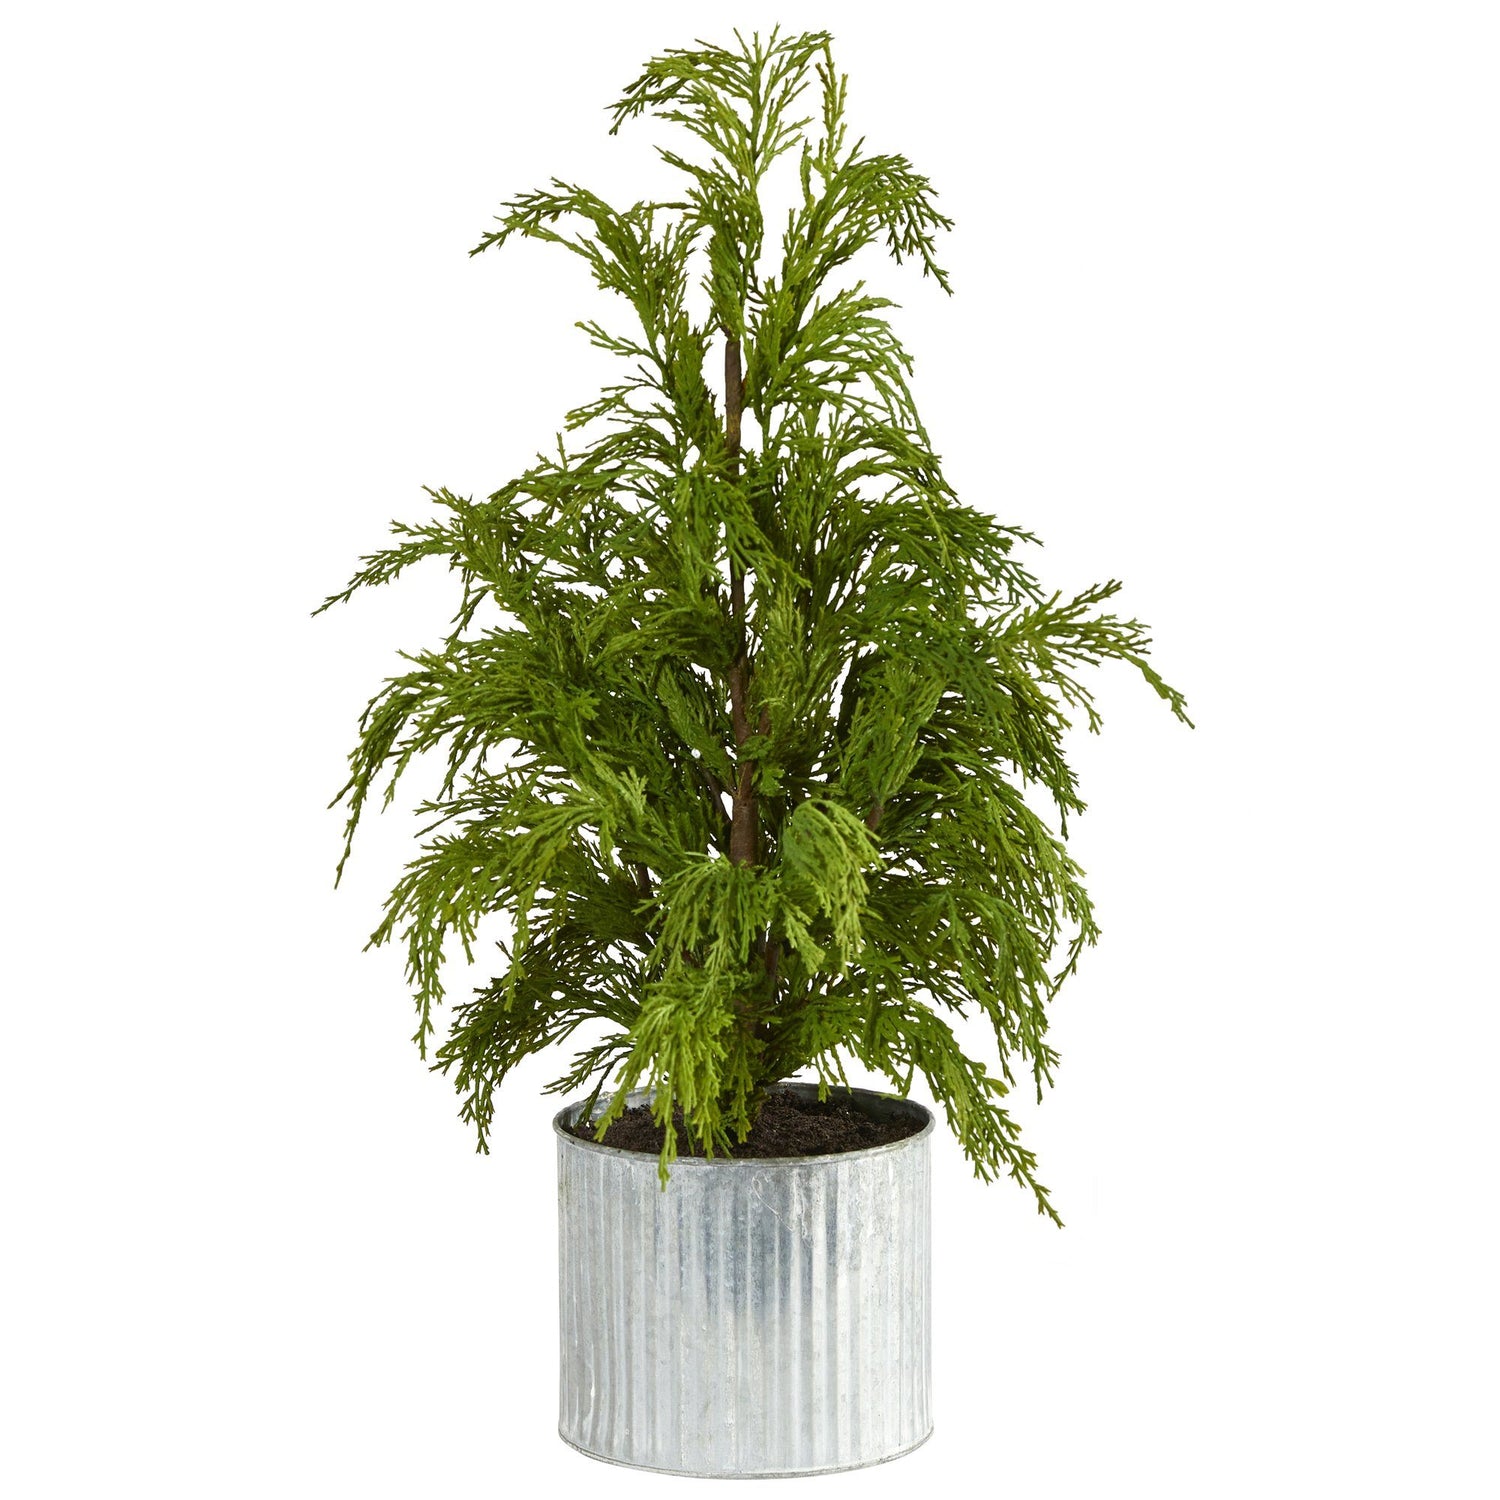 20” Cedar Pine “Natural Look” Artificial Christmas Tree in Decorative Planter